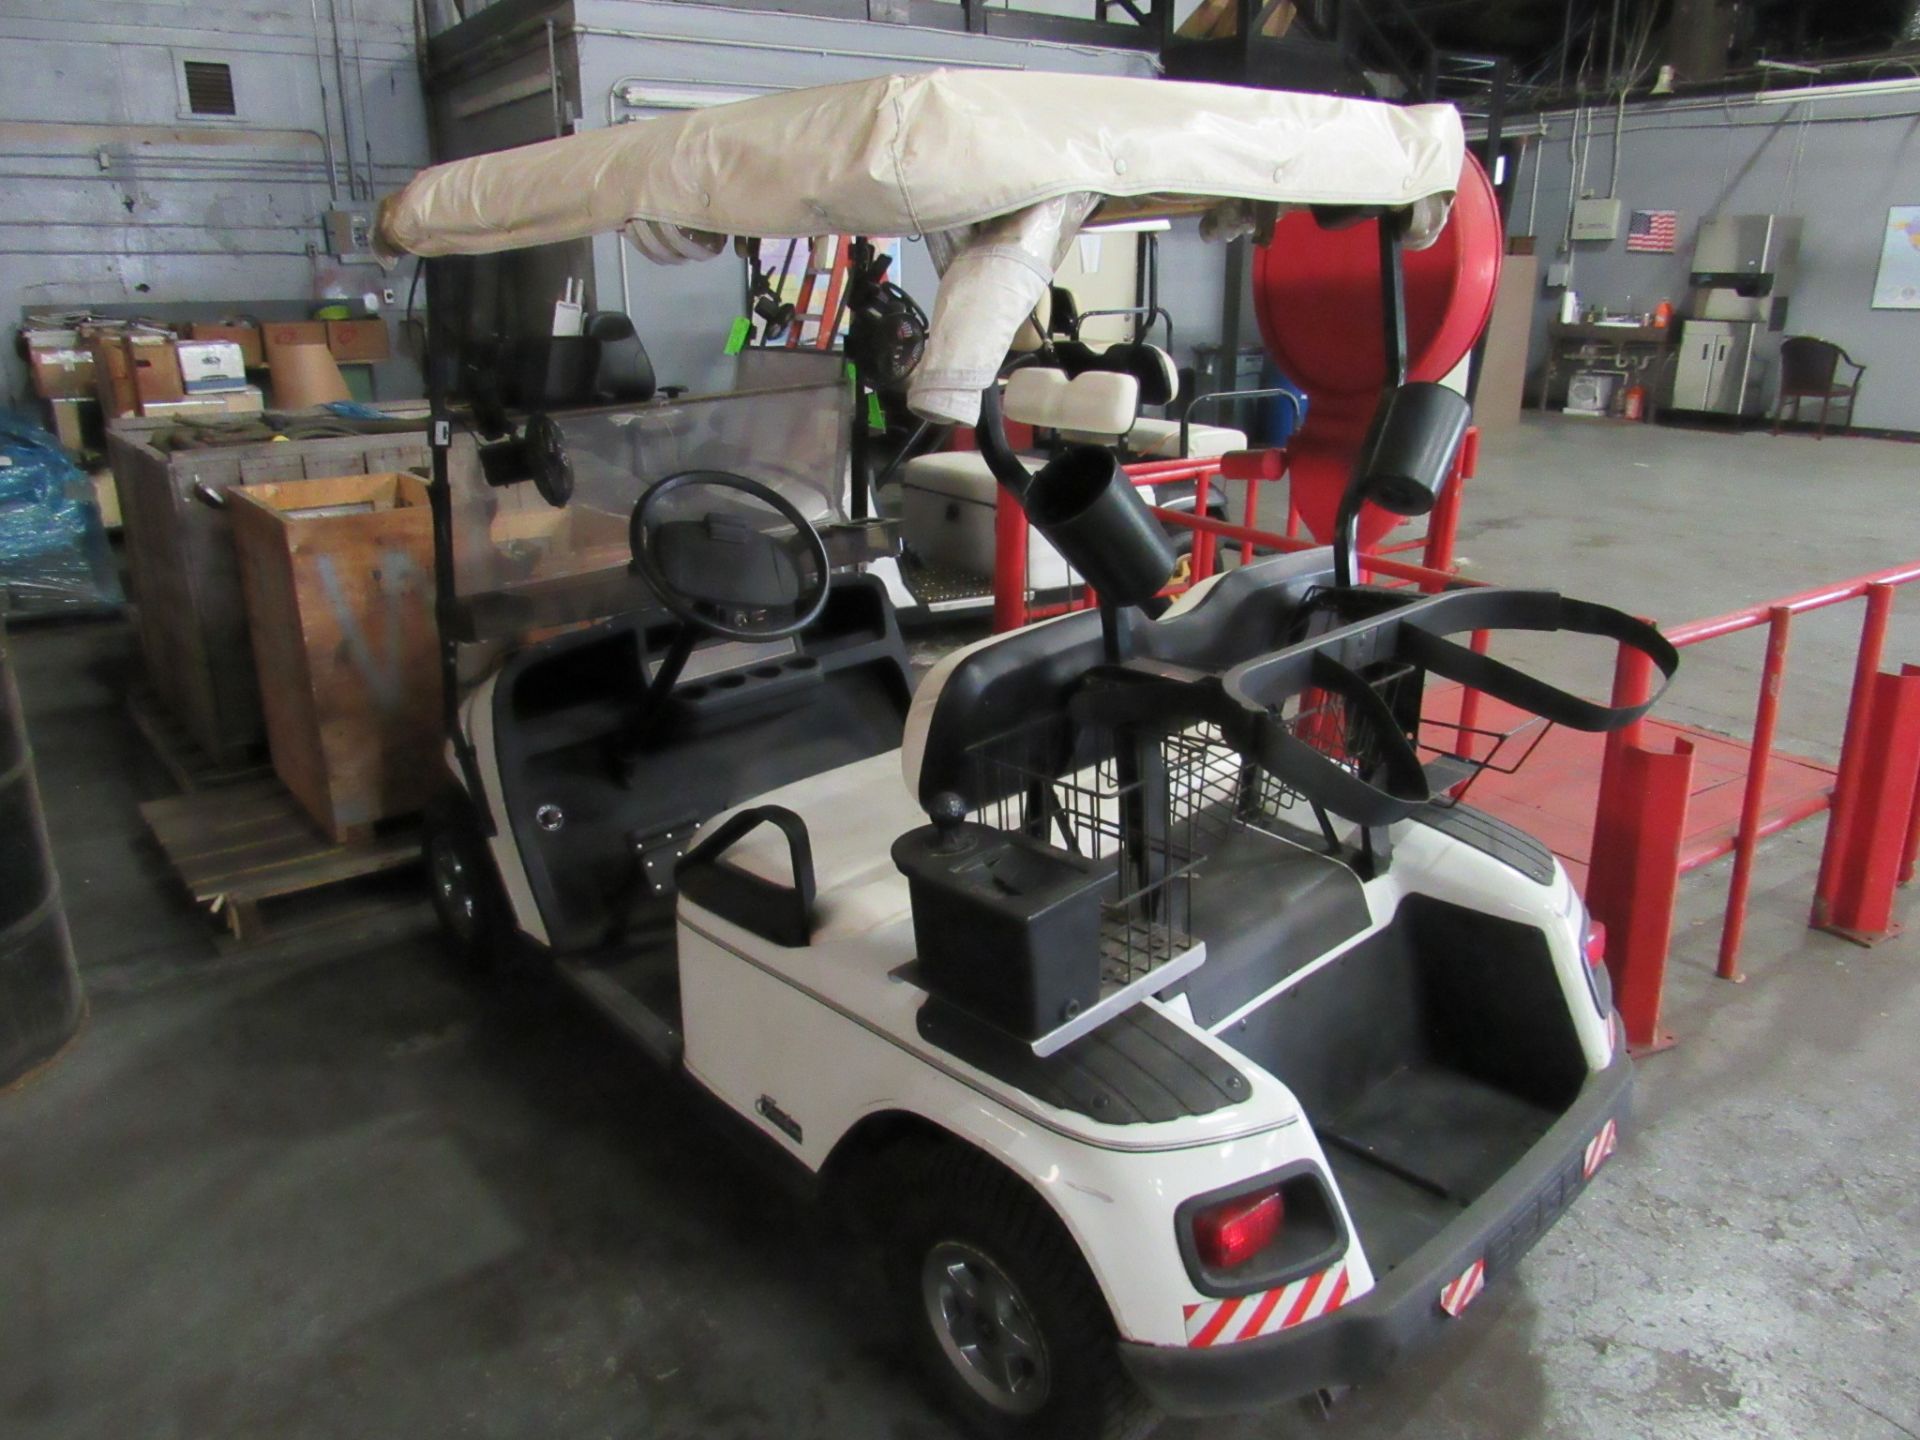 E-Z Go Textron Golf Cart Model L398, S/N 1135265 - Image 2 of 3